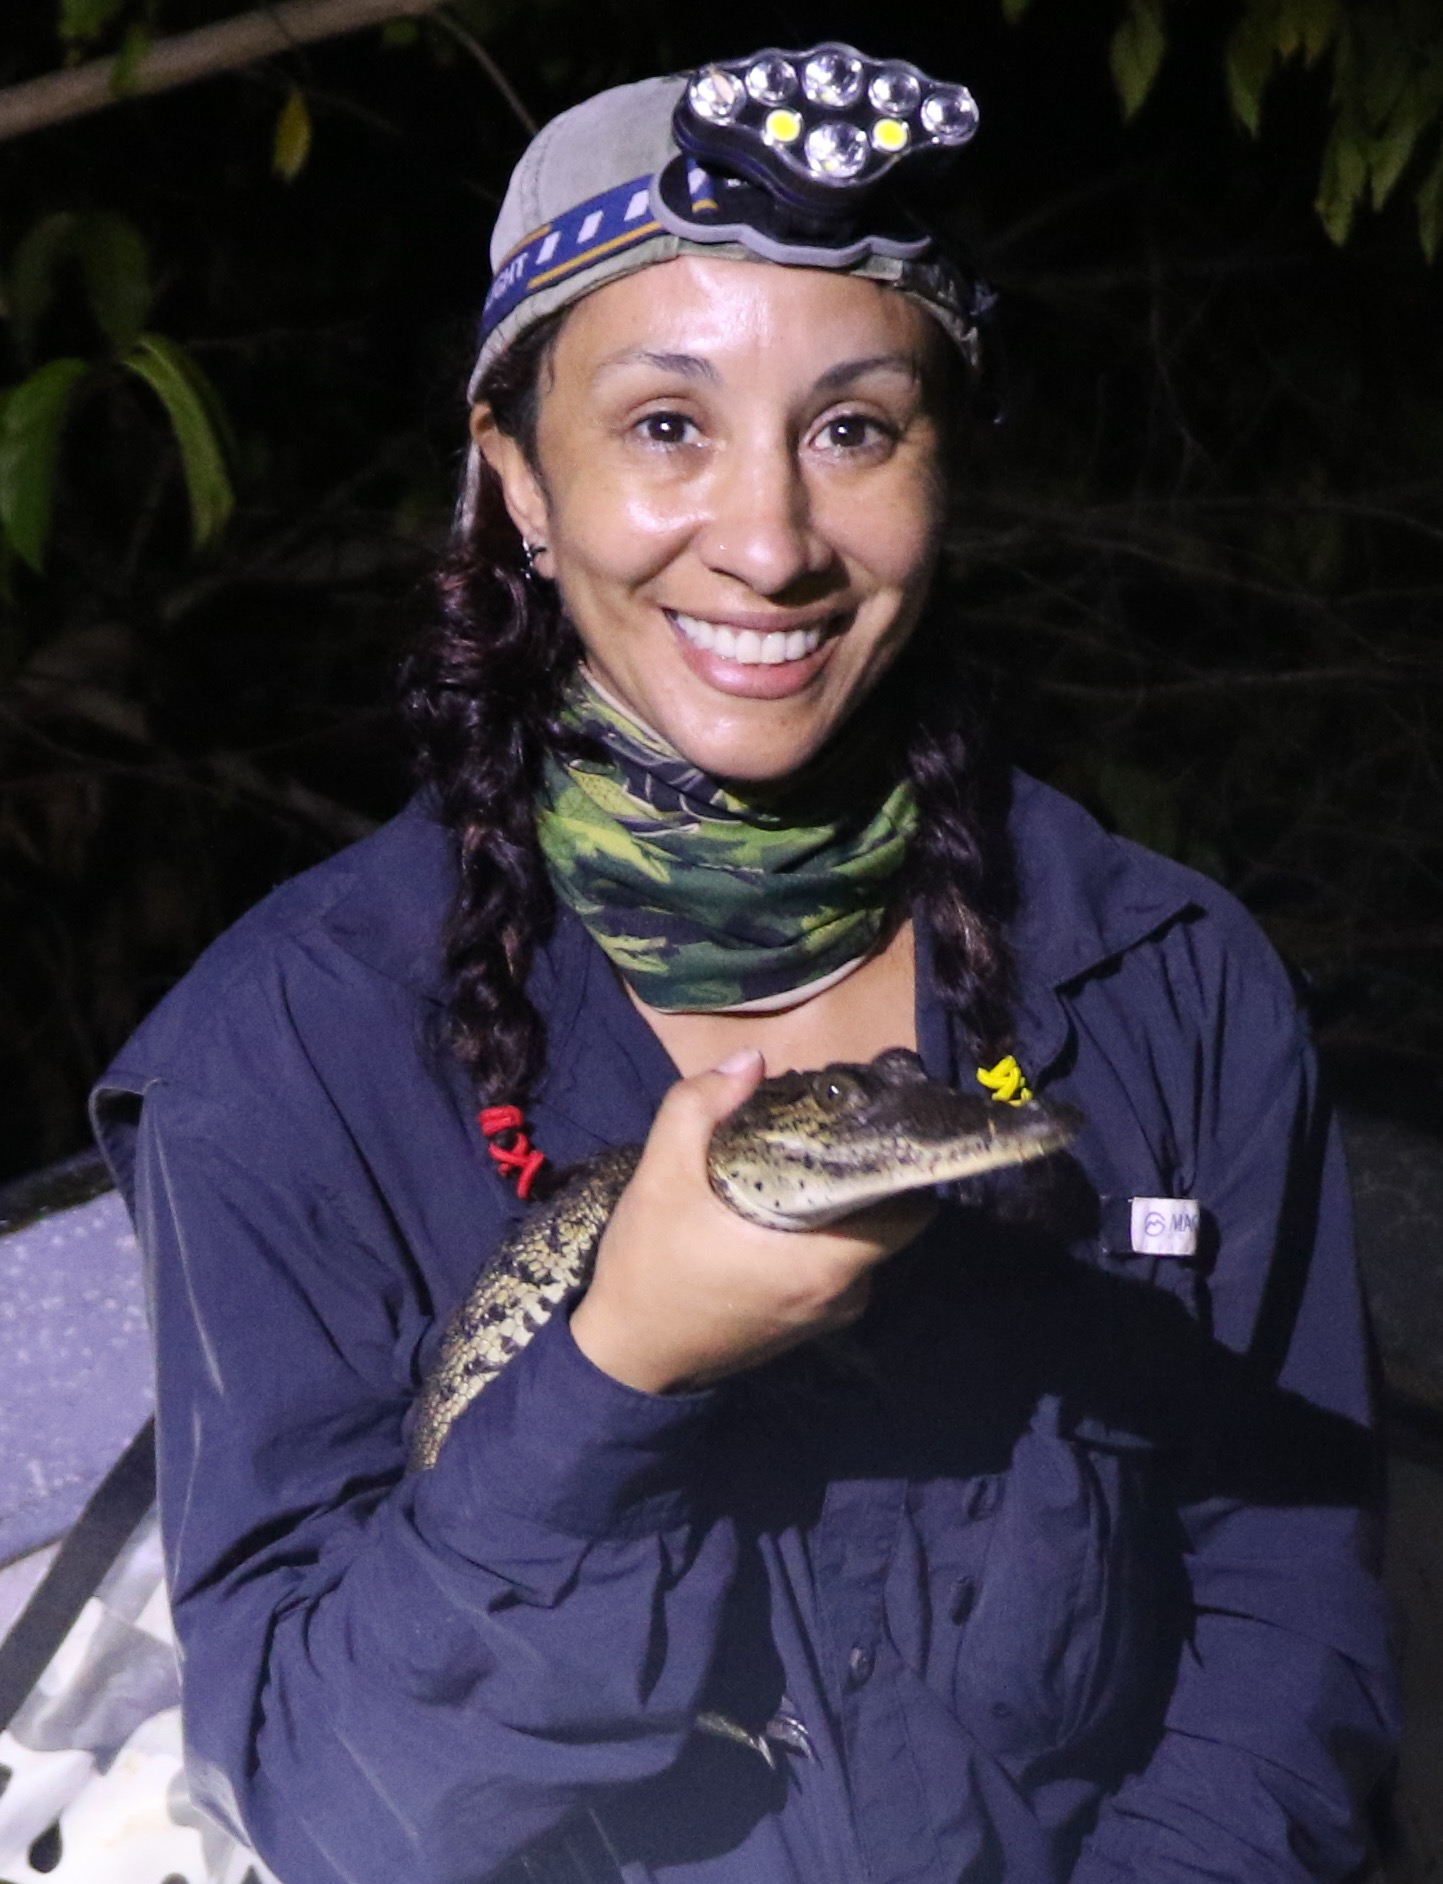 A woman holding a tiny crocodile with a headlamp on.